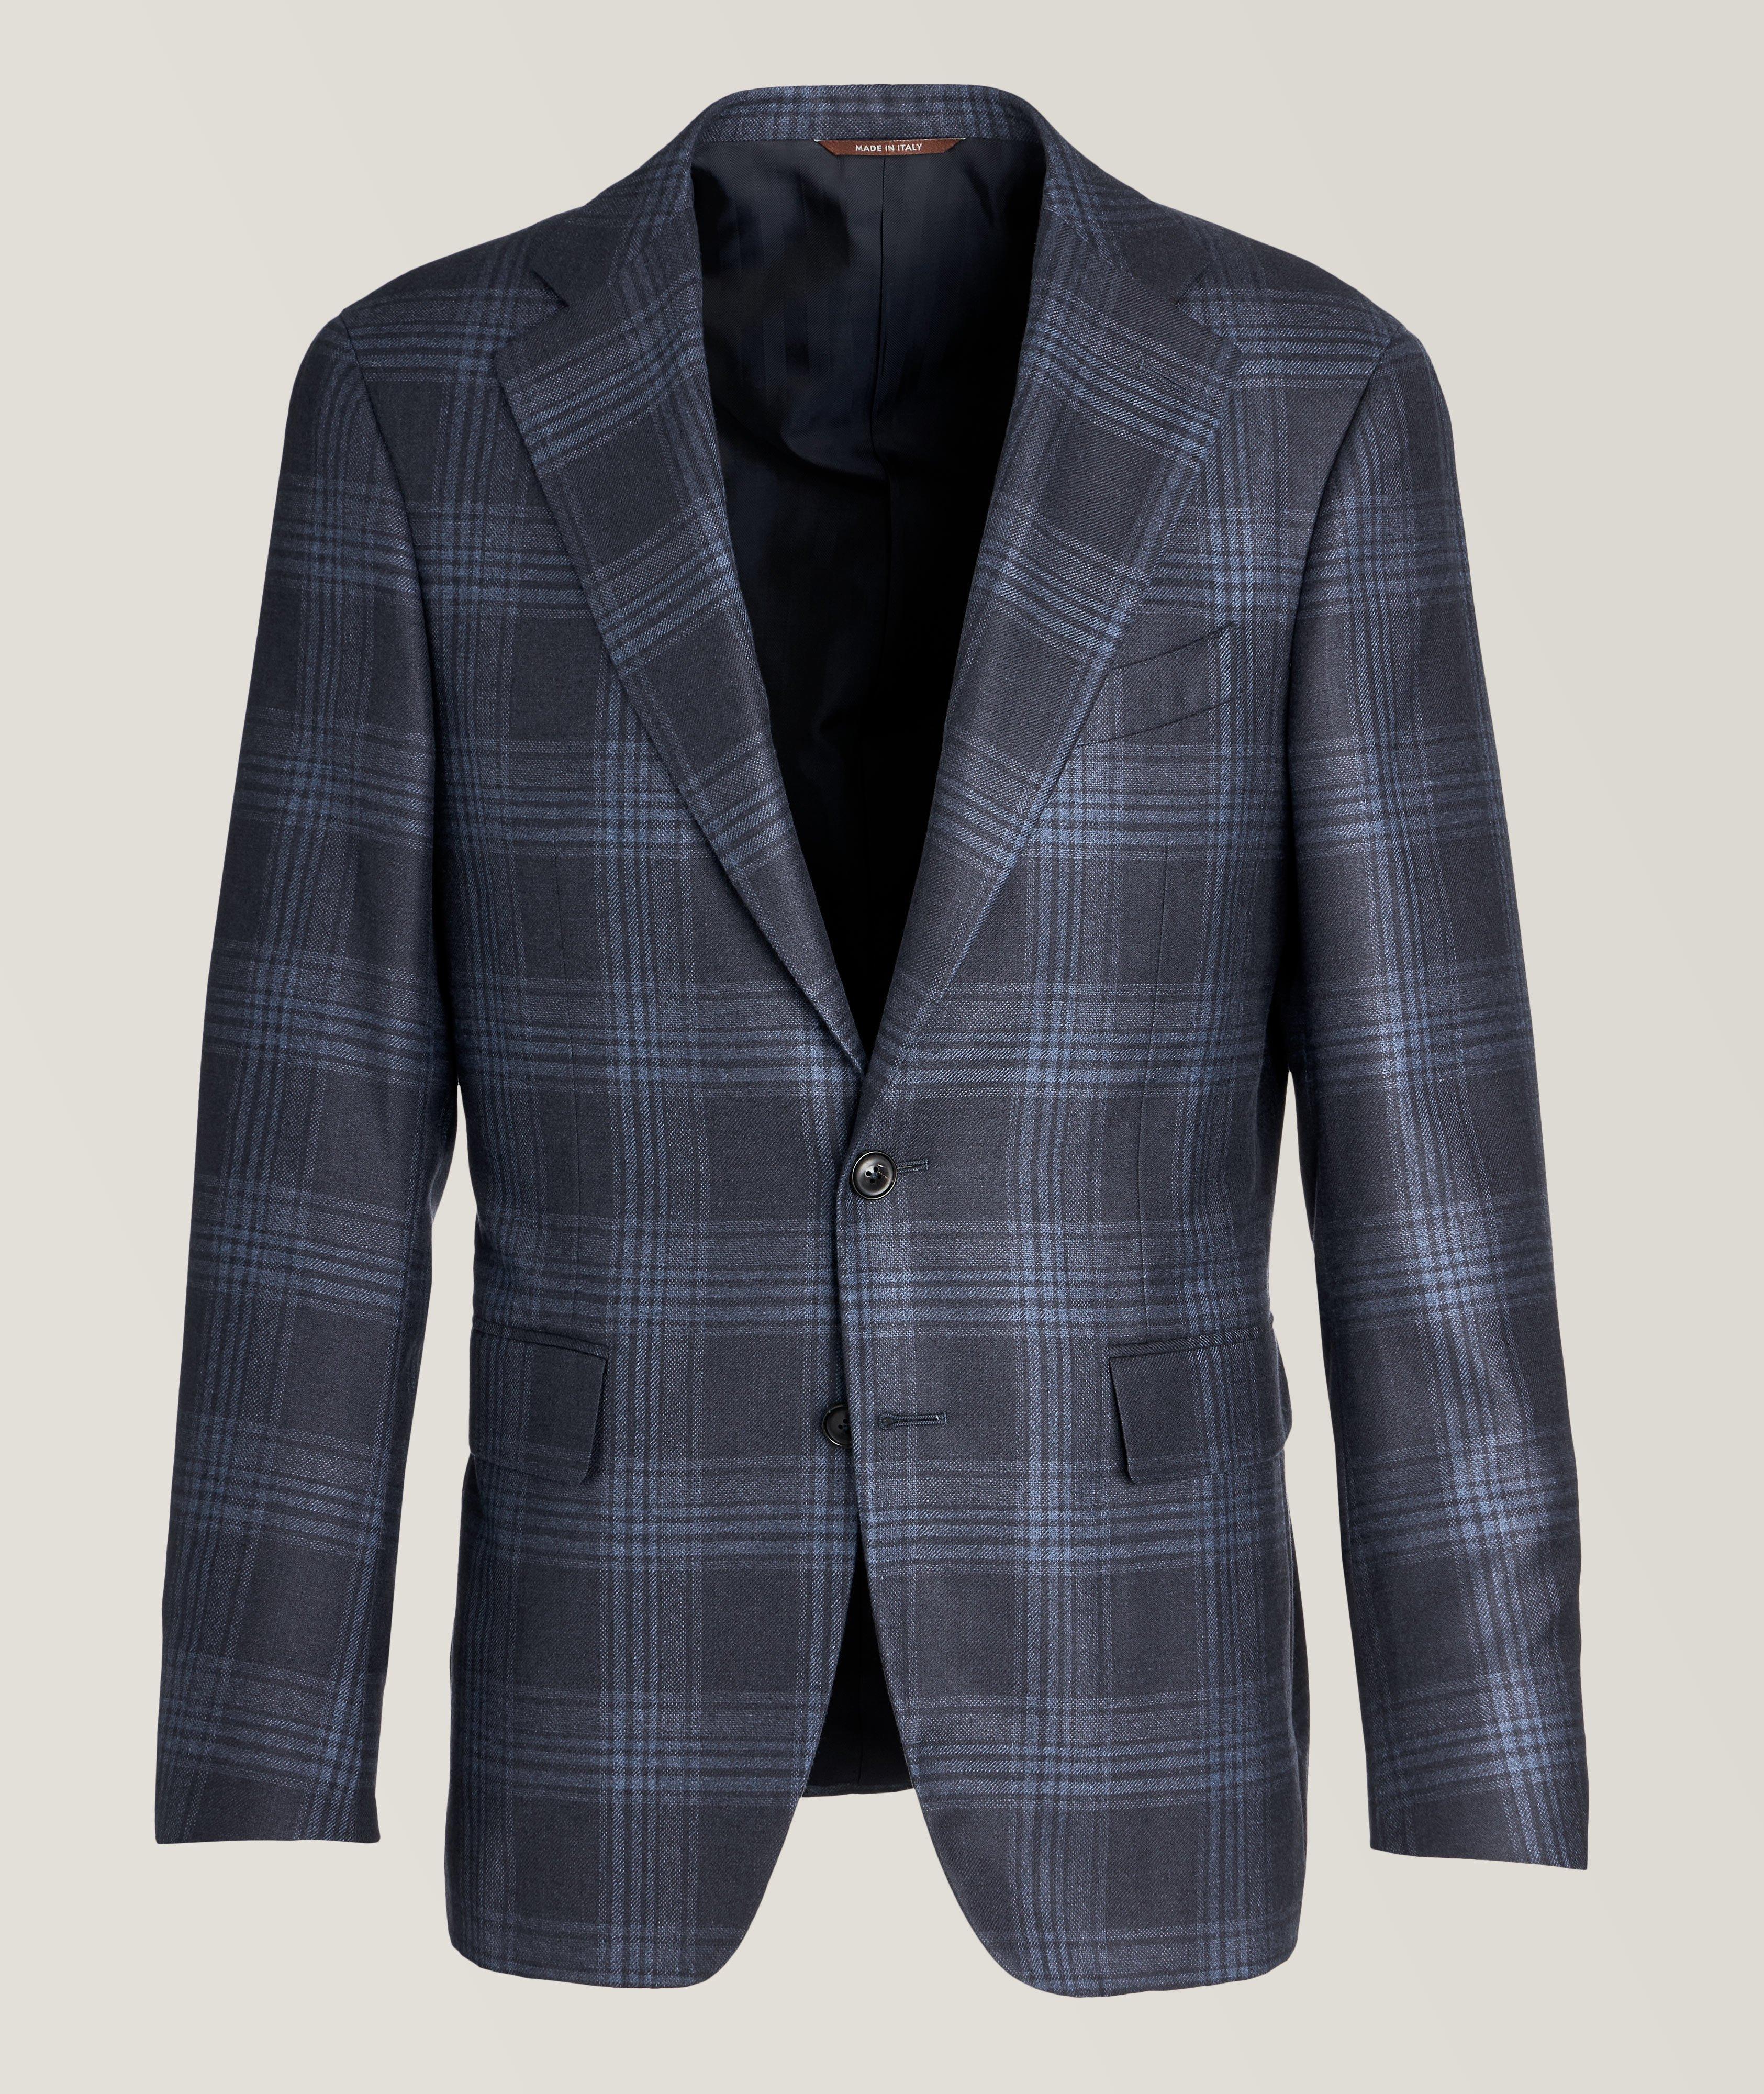 Canali Kei Silk-Cashmere Checkered Sport Jacket